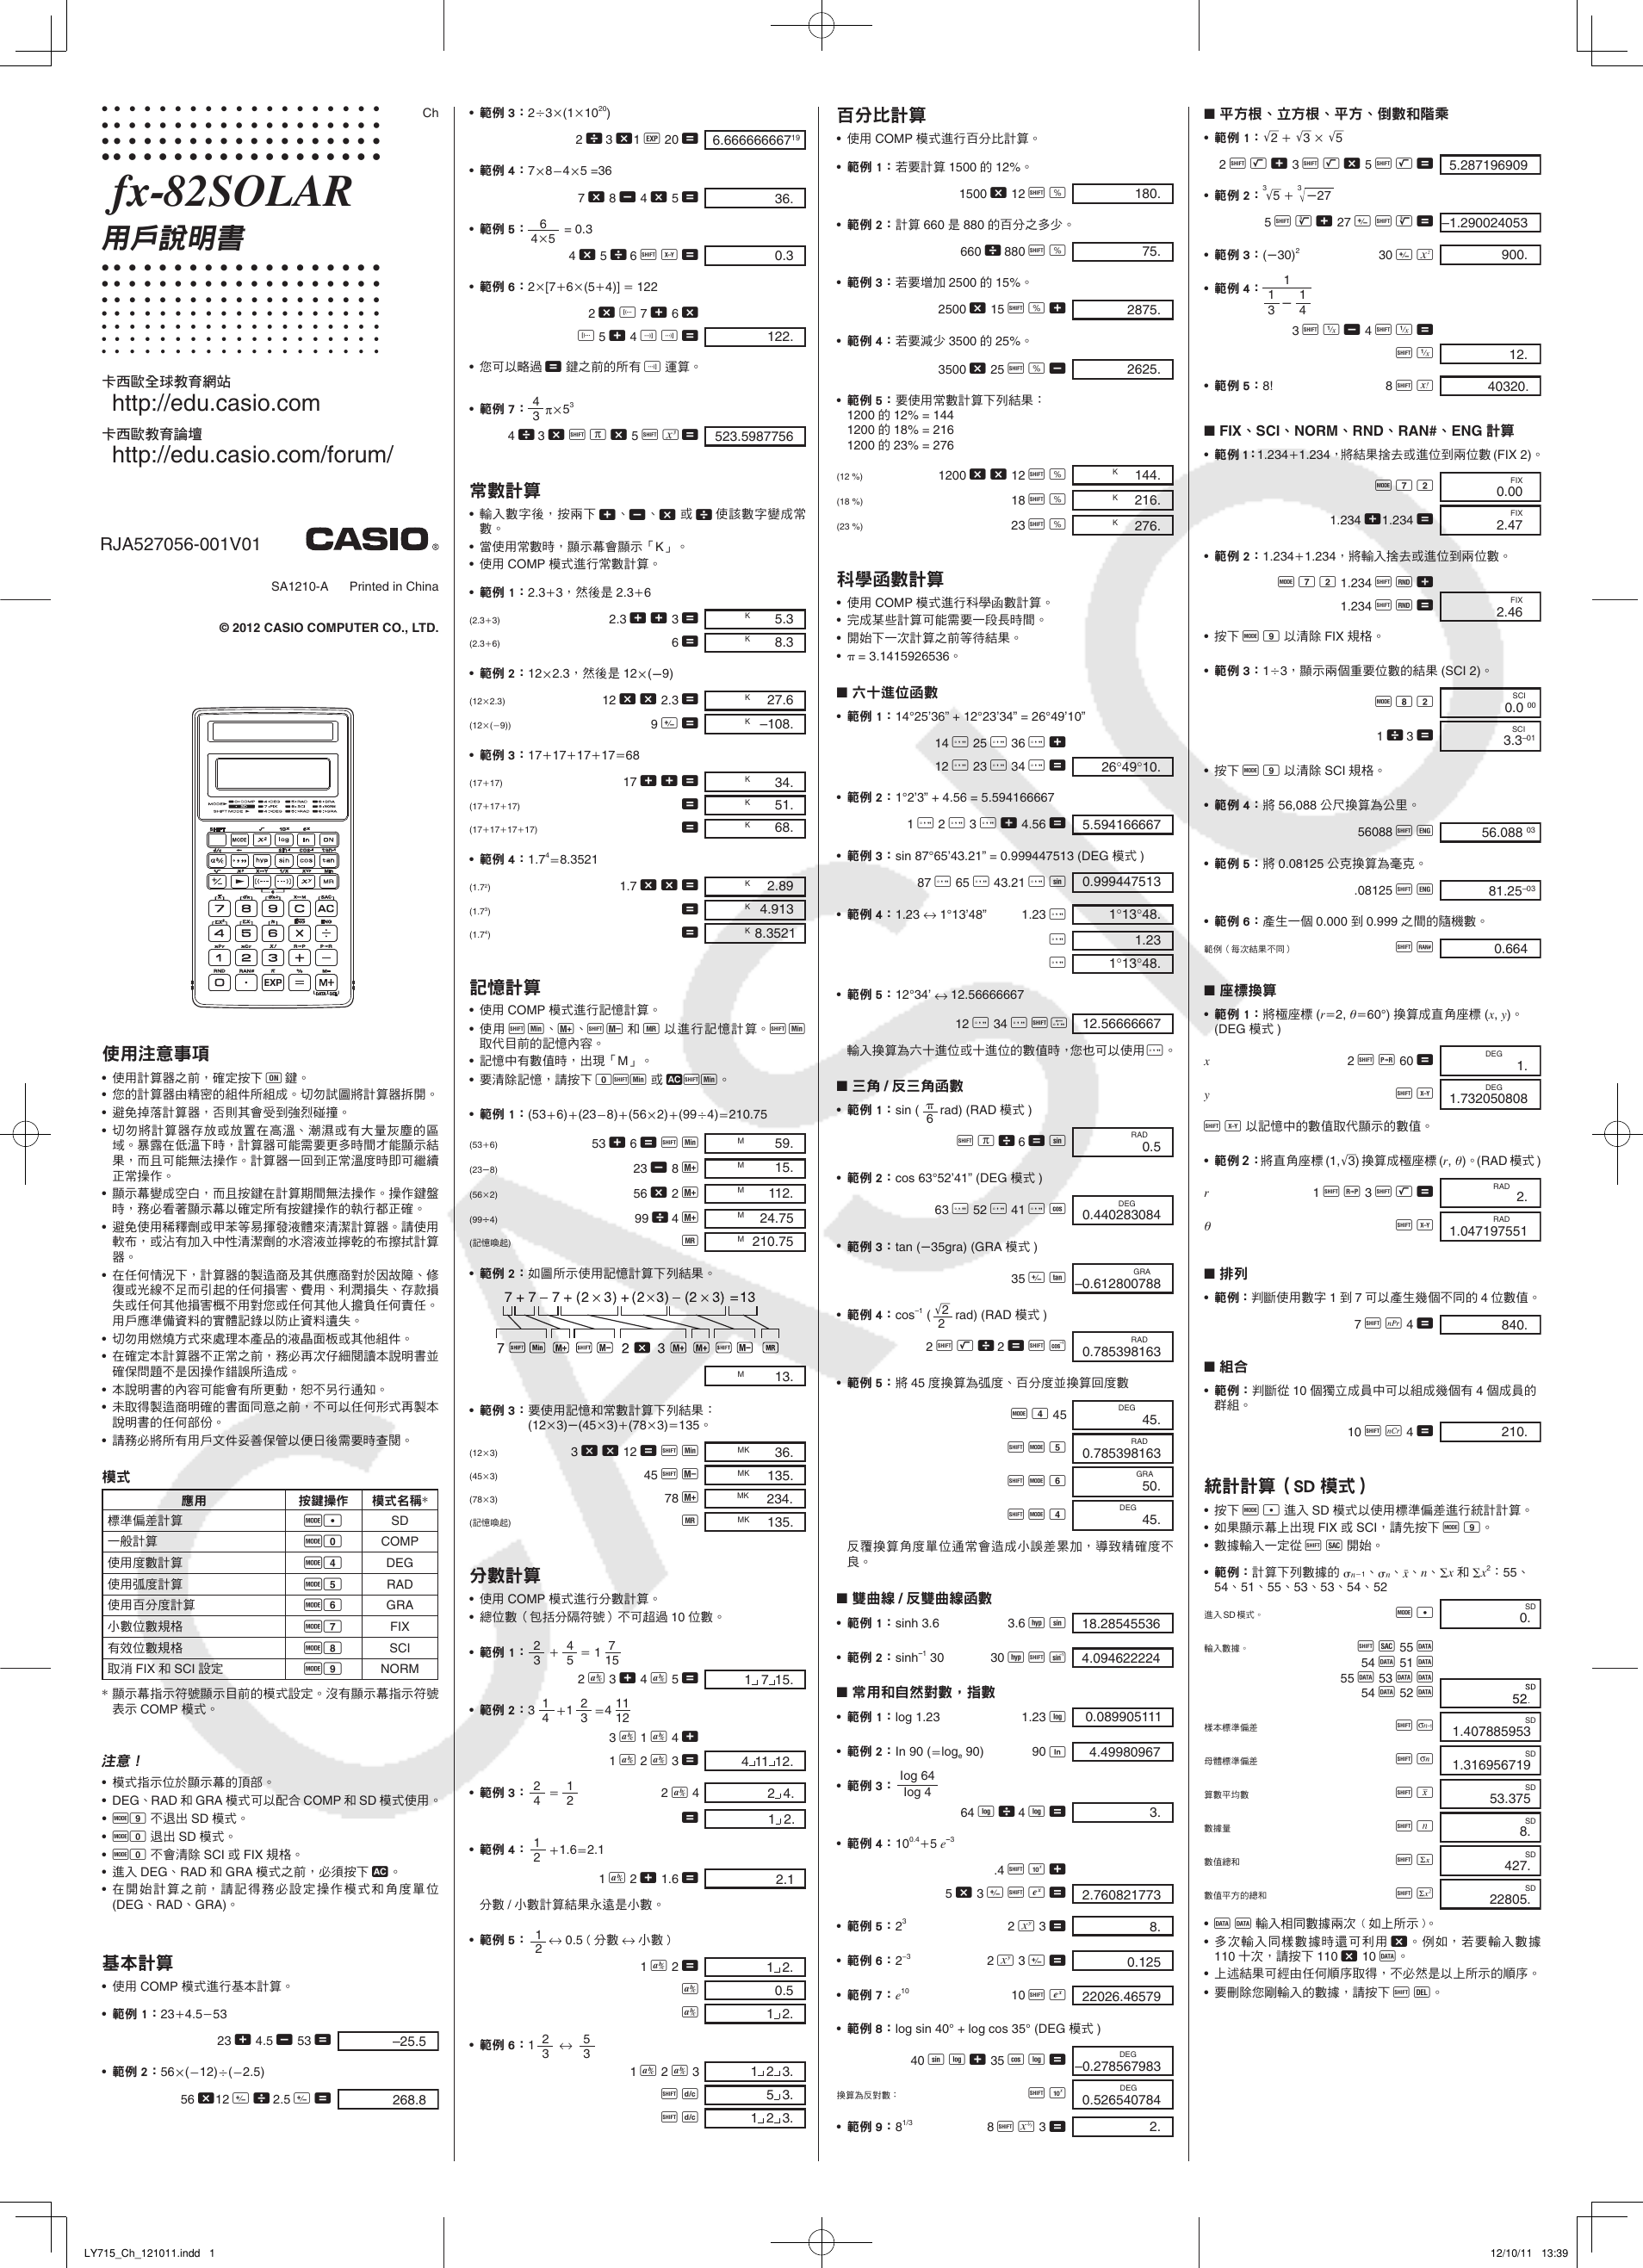 Page 1 of 2 - Casio Fx-82SOLAR Fx82SOLAR TW